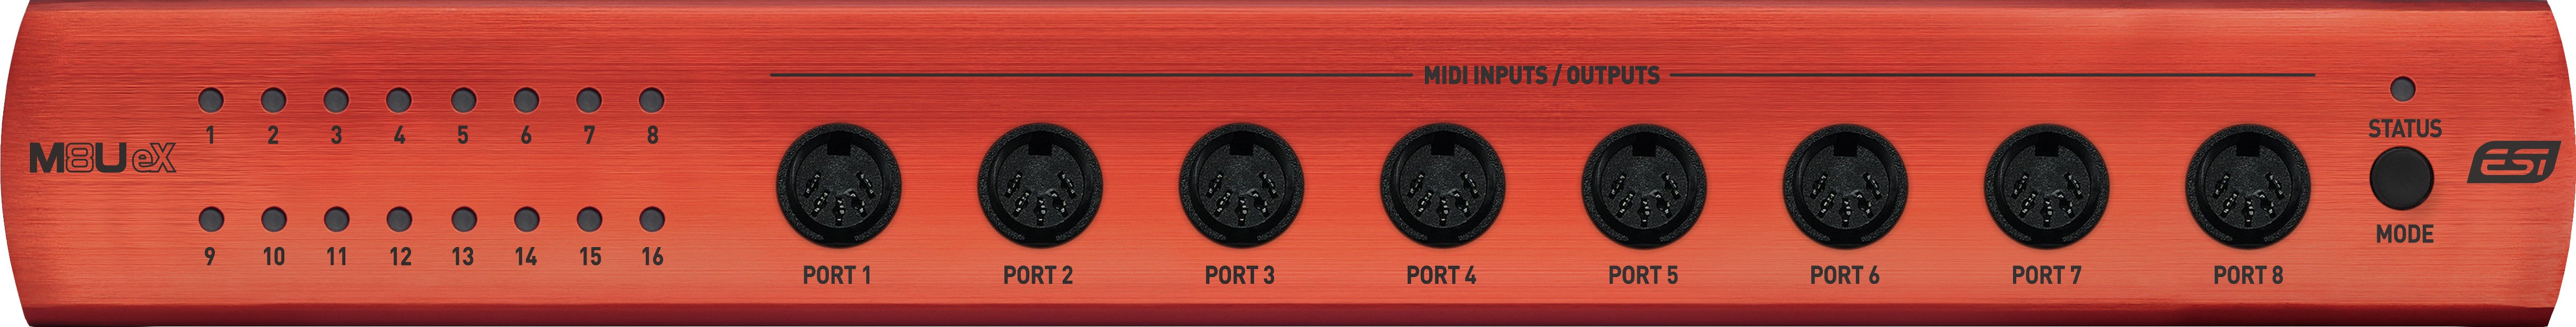 ESI Audio M8U eX - 16-port USB 3.0 MIDI interface with USB hub - Black/Orange